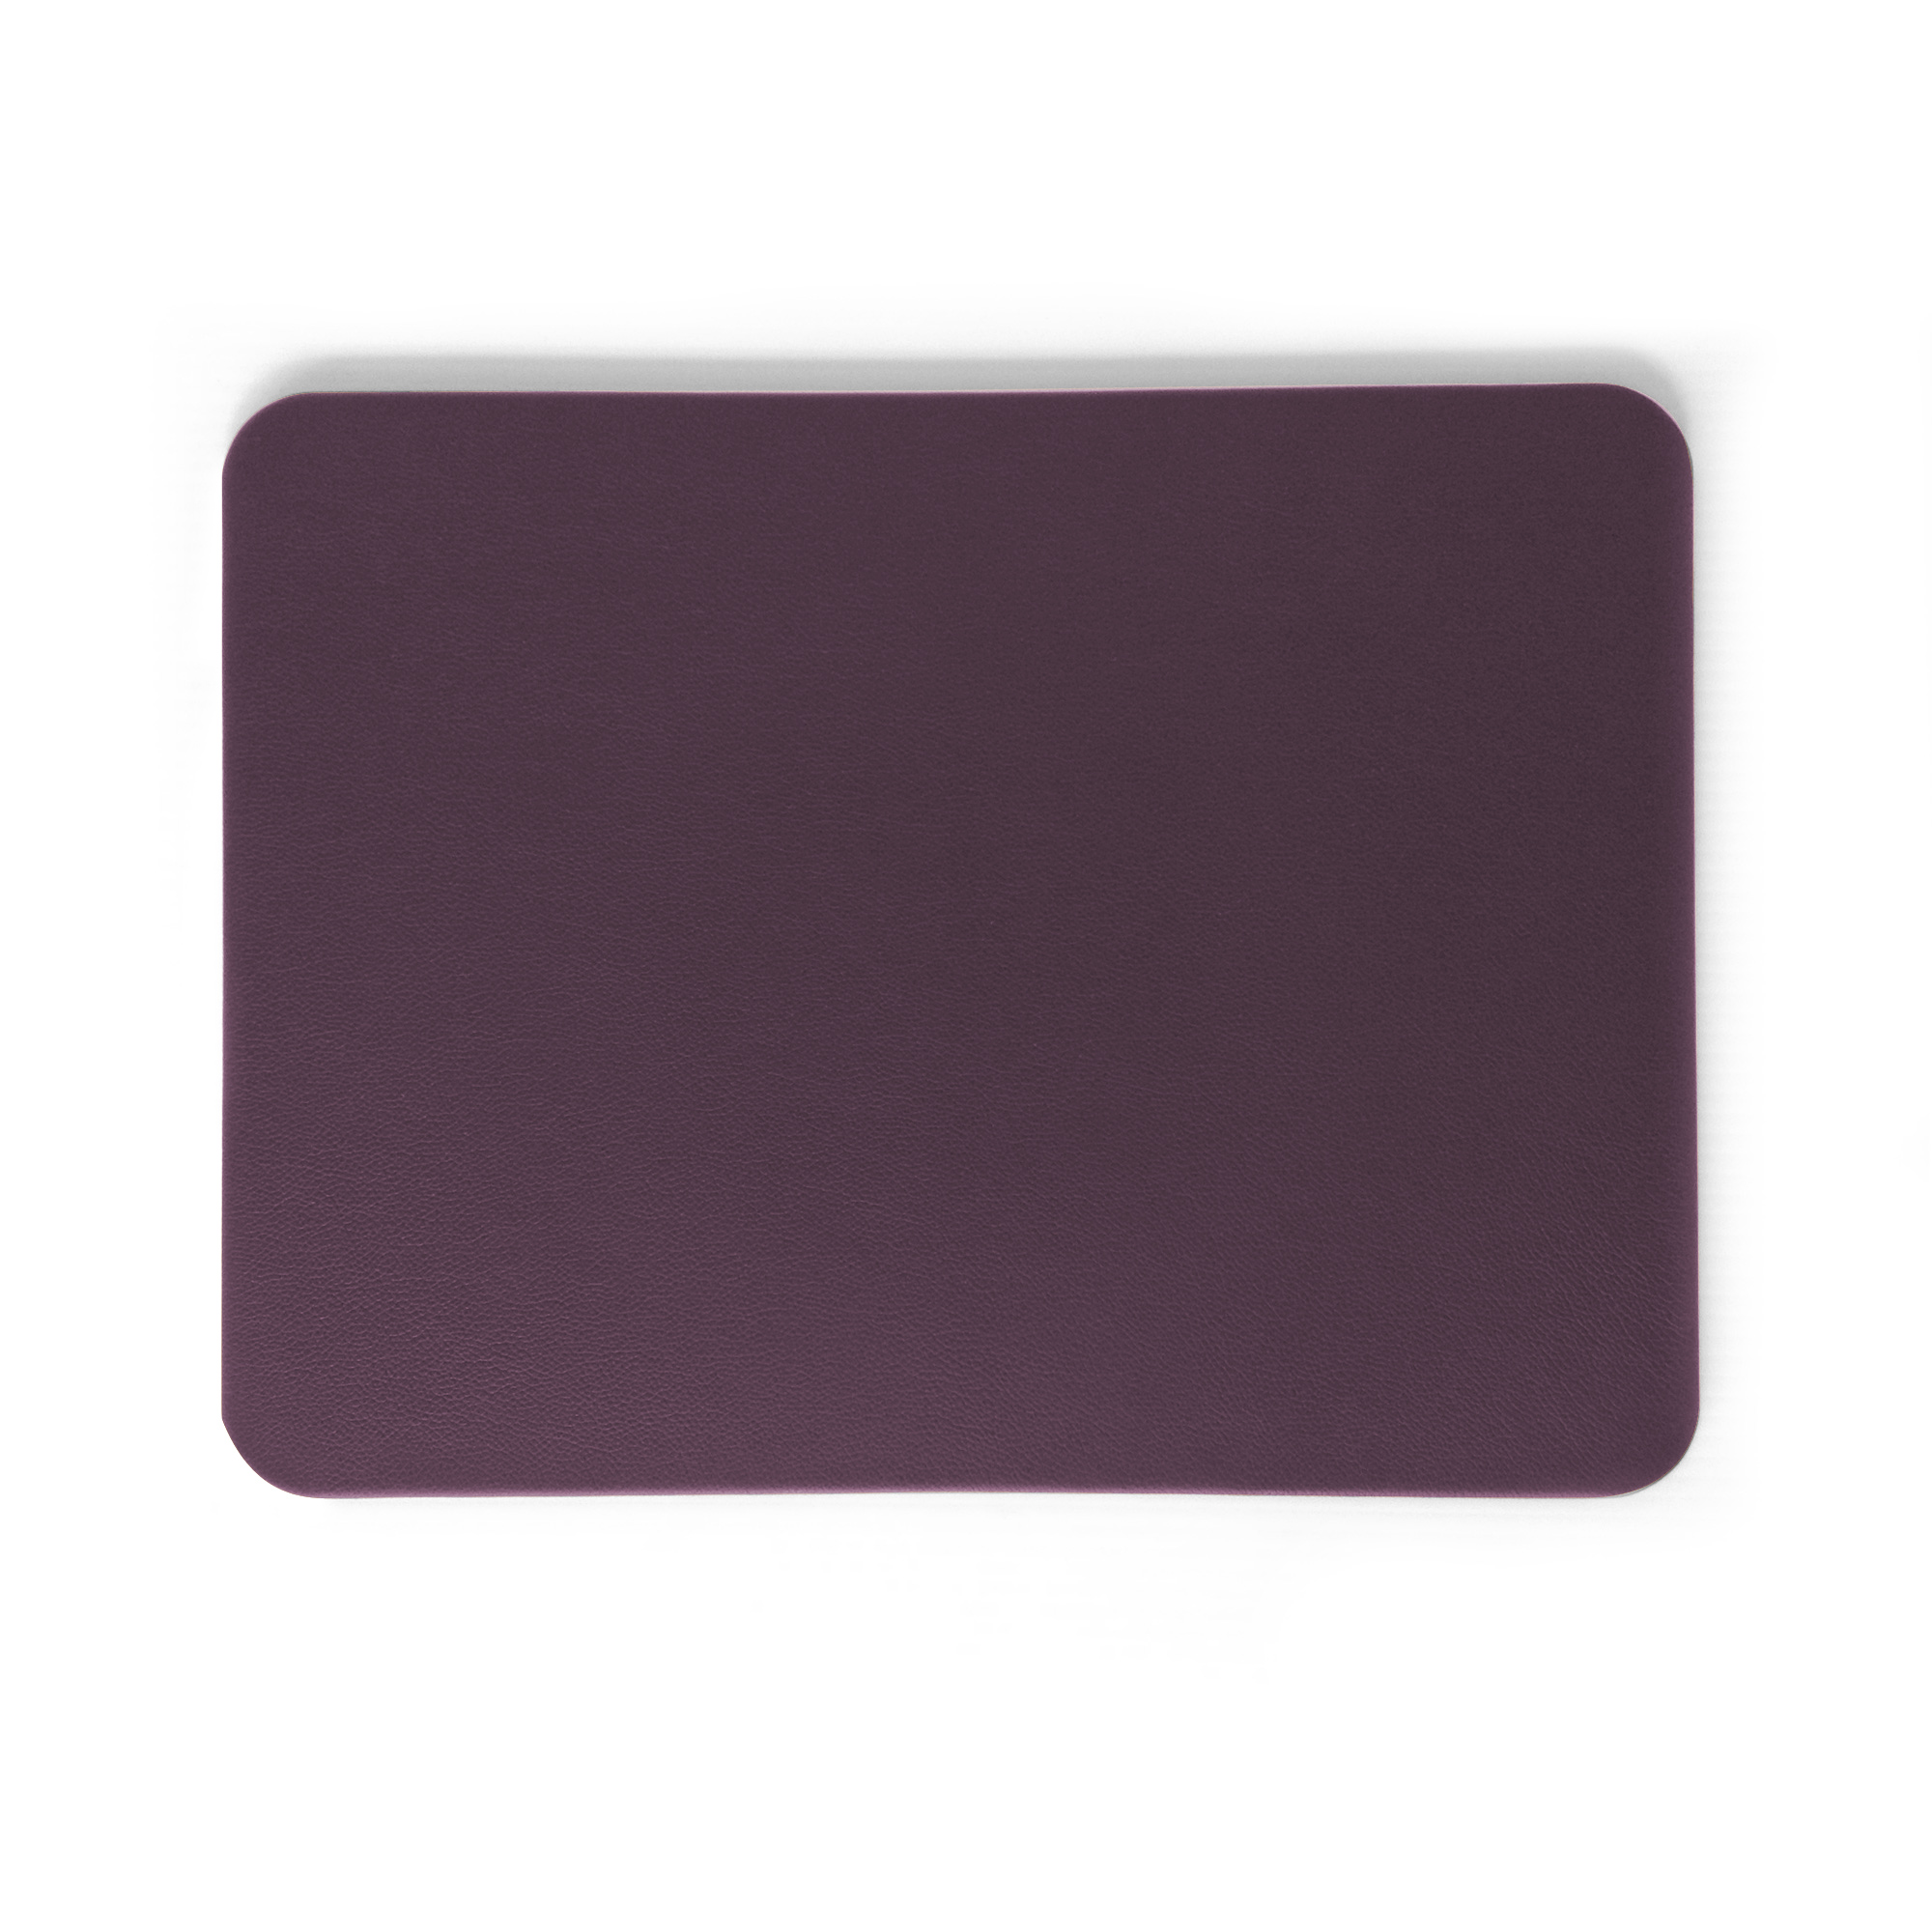 Purple Leather Desk Pad: Executive Blotter Made of Genuine Leather ...